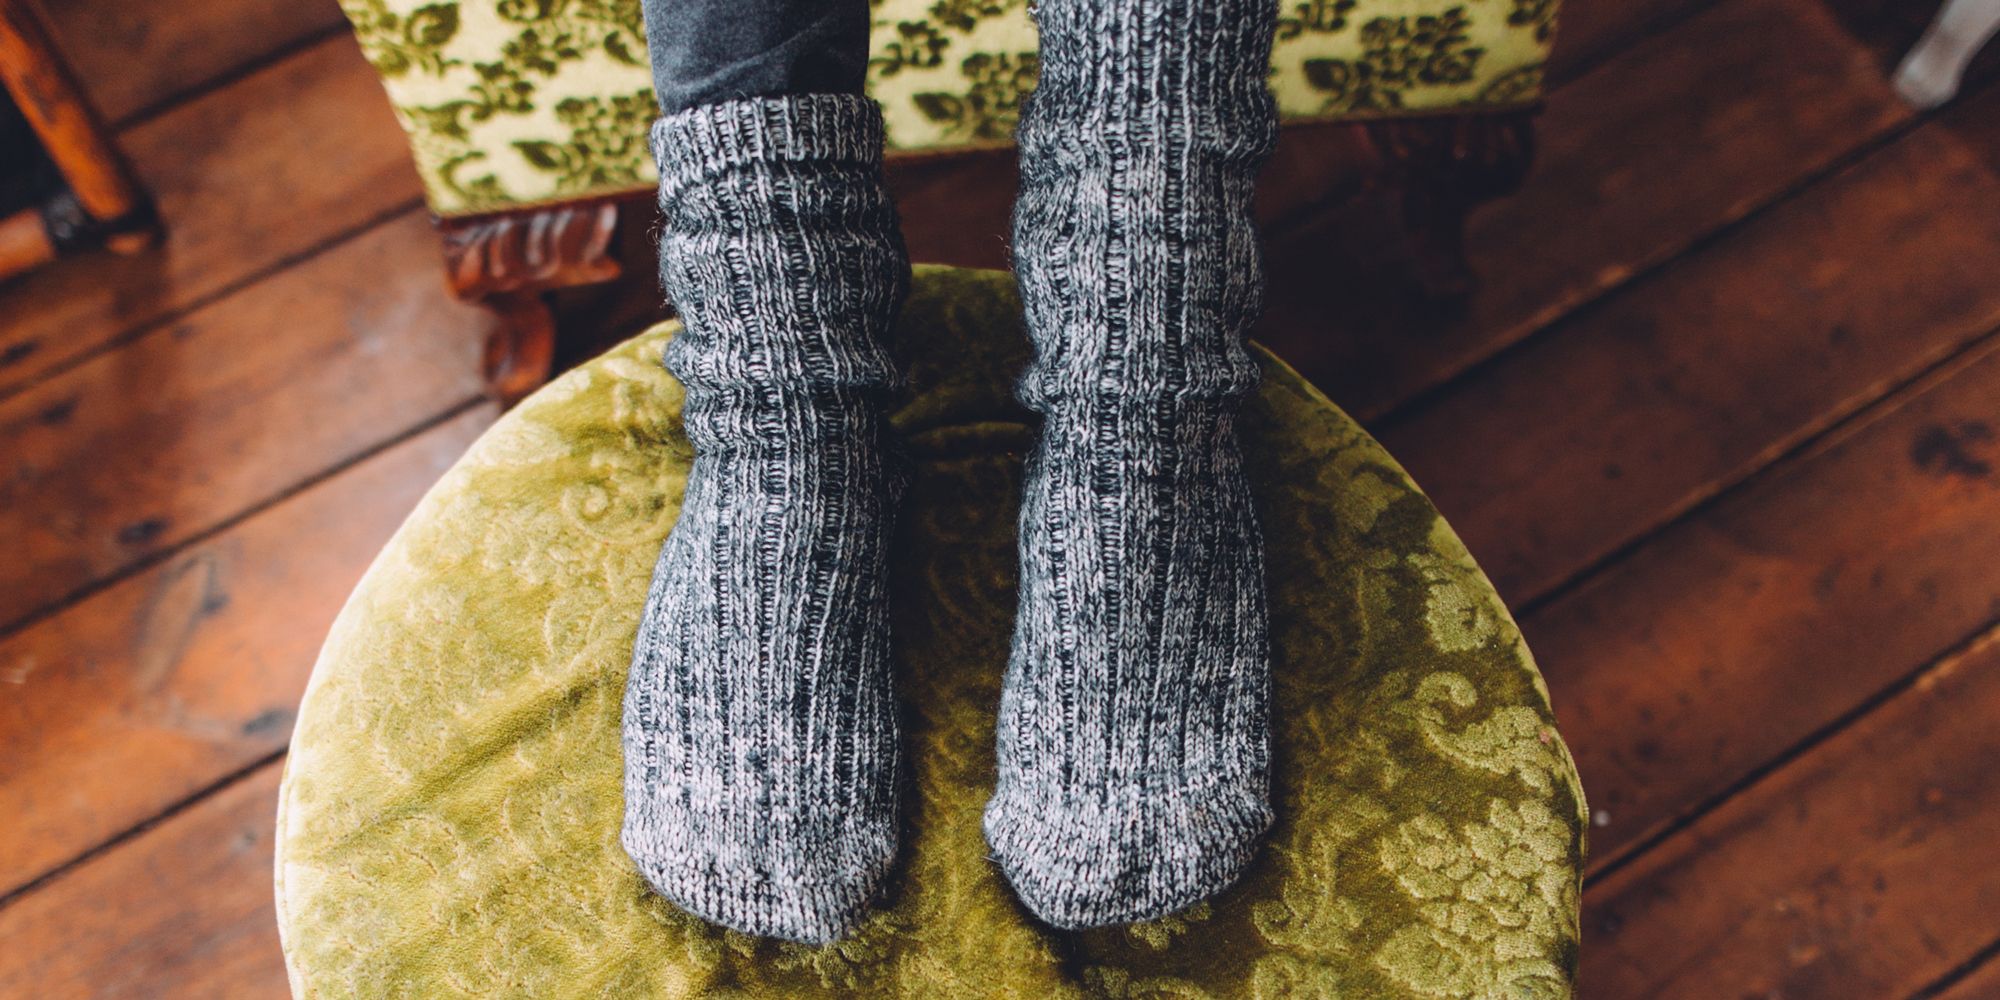 Pueri Rechargeable Battery Heated Socks Electric Warm Socks Winter Indoor Outdoor Sport Thermal Socks for Men and Women